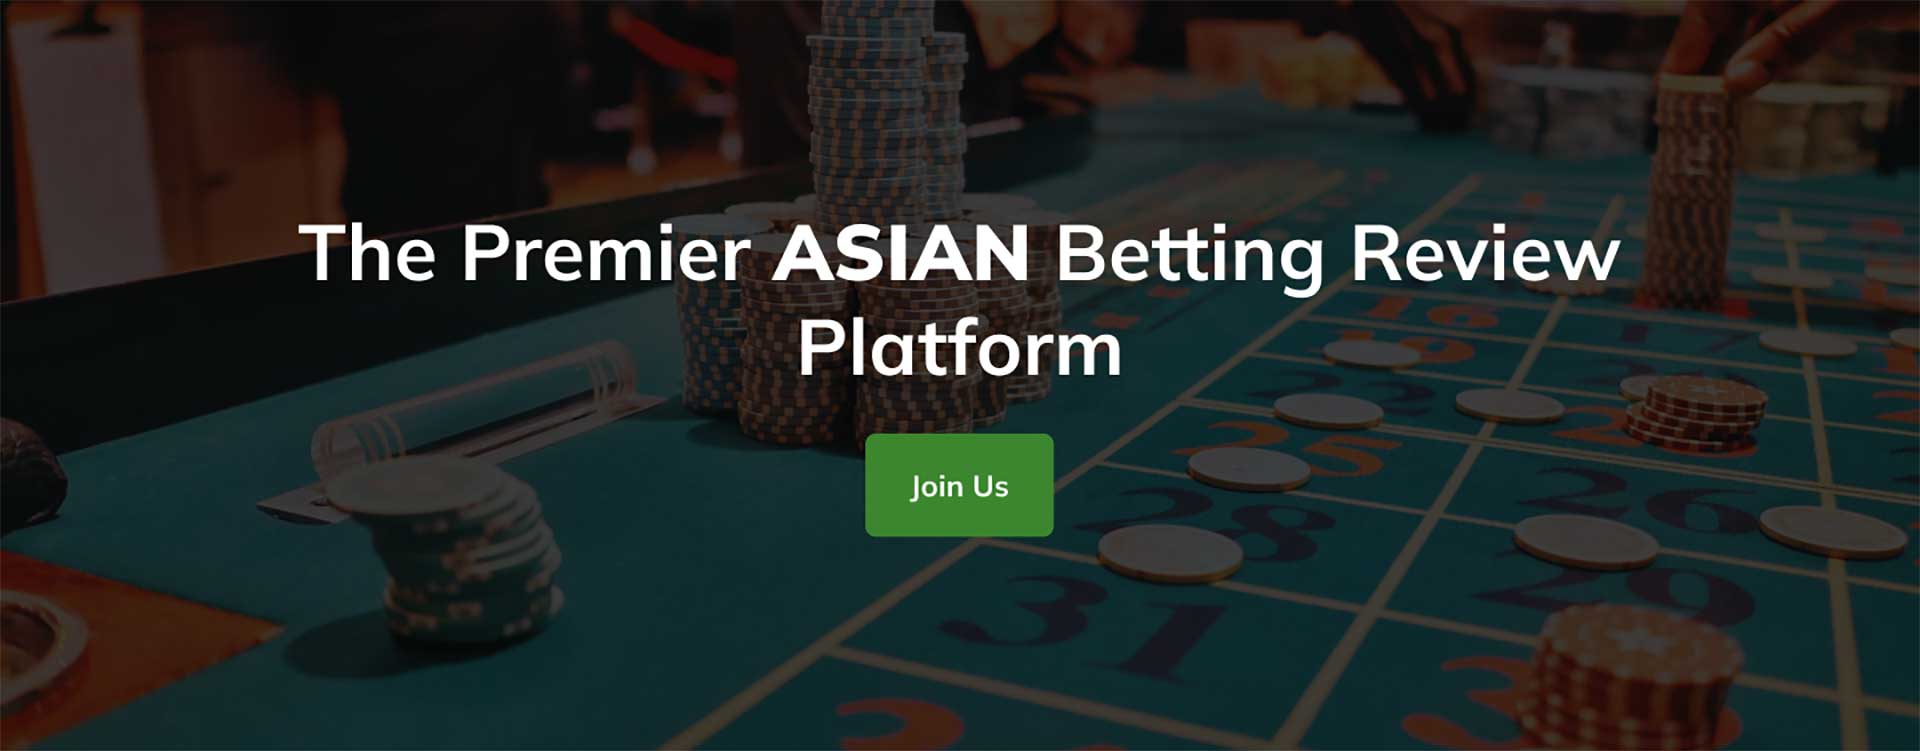 Online Casino Singapore Banner